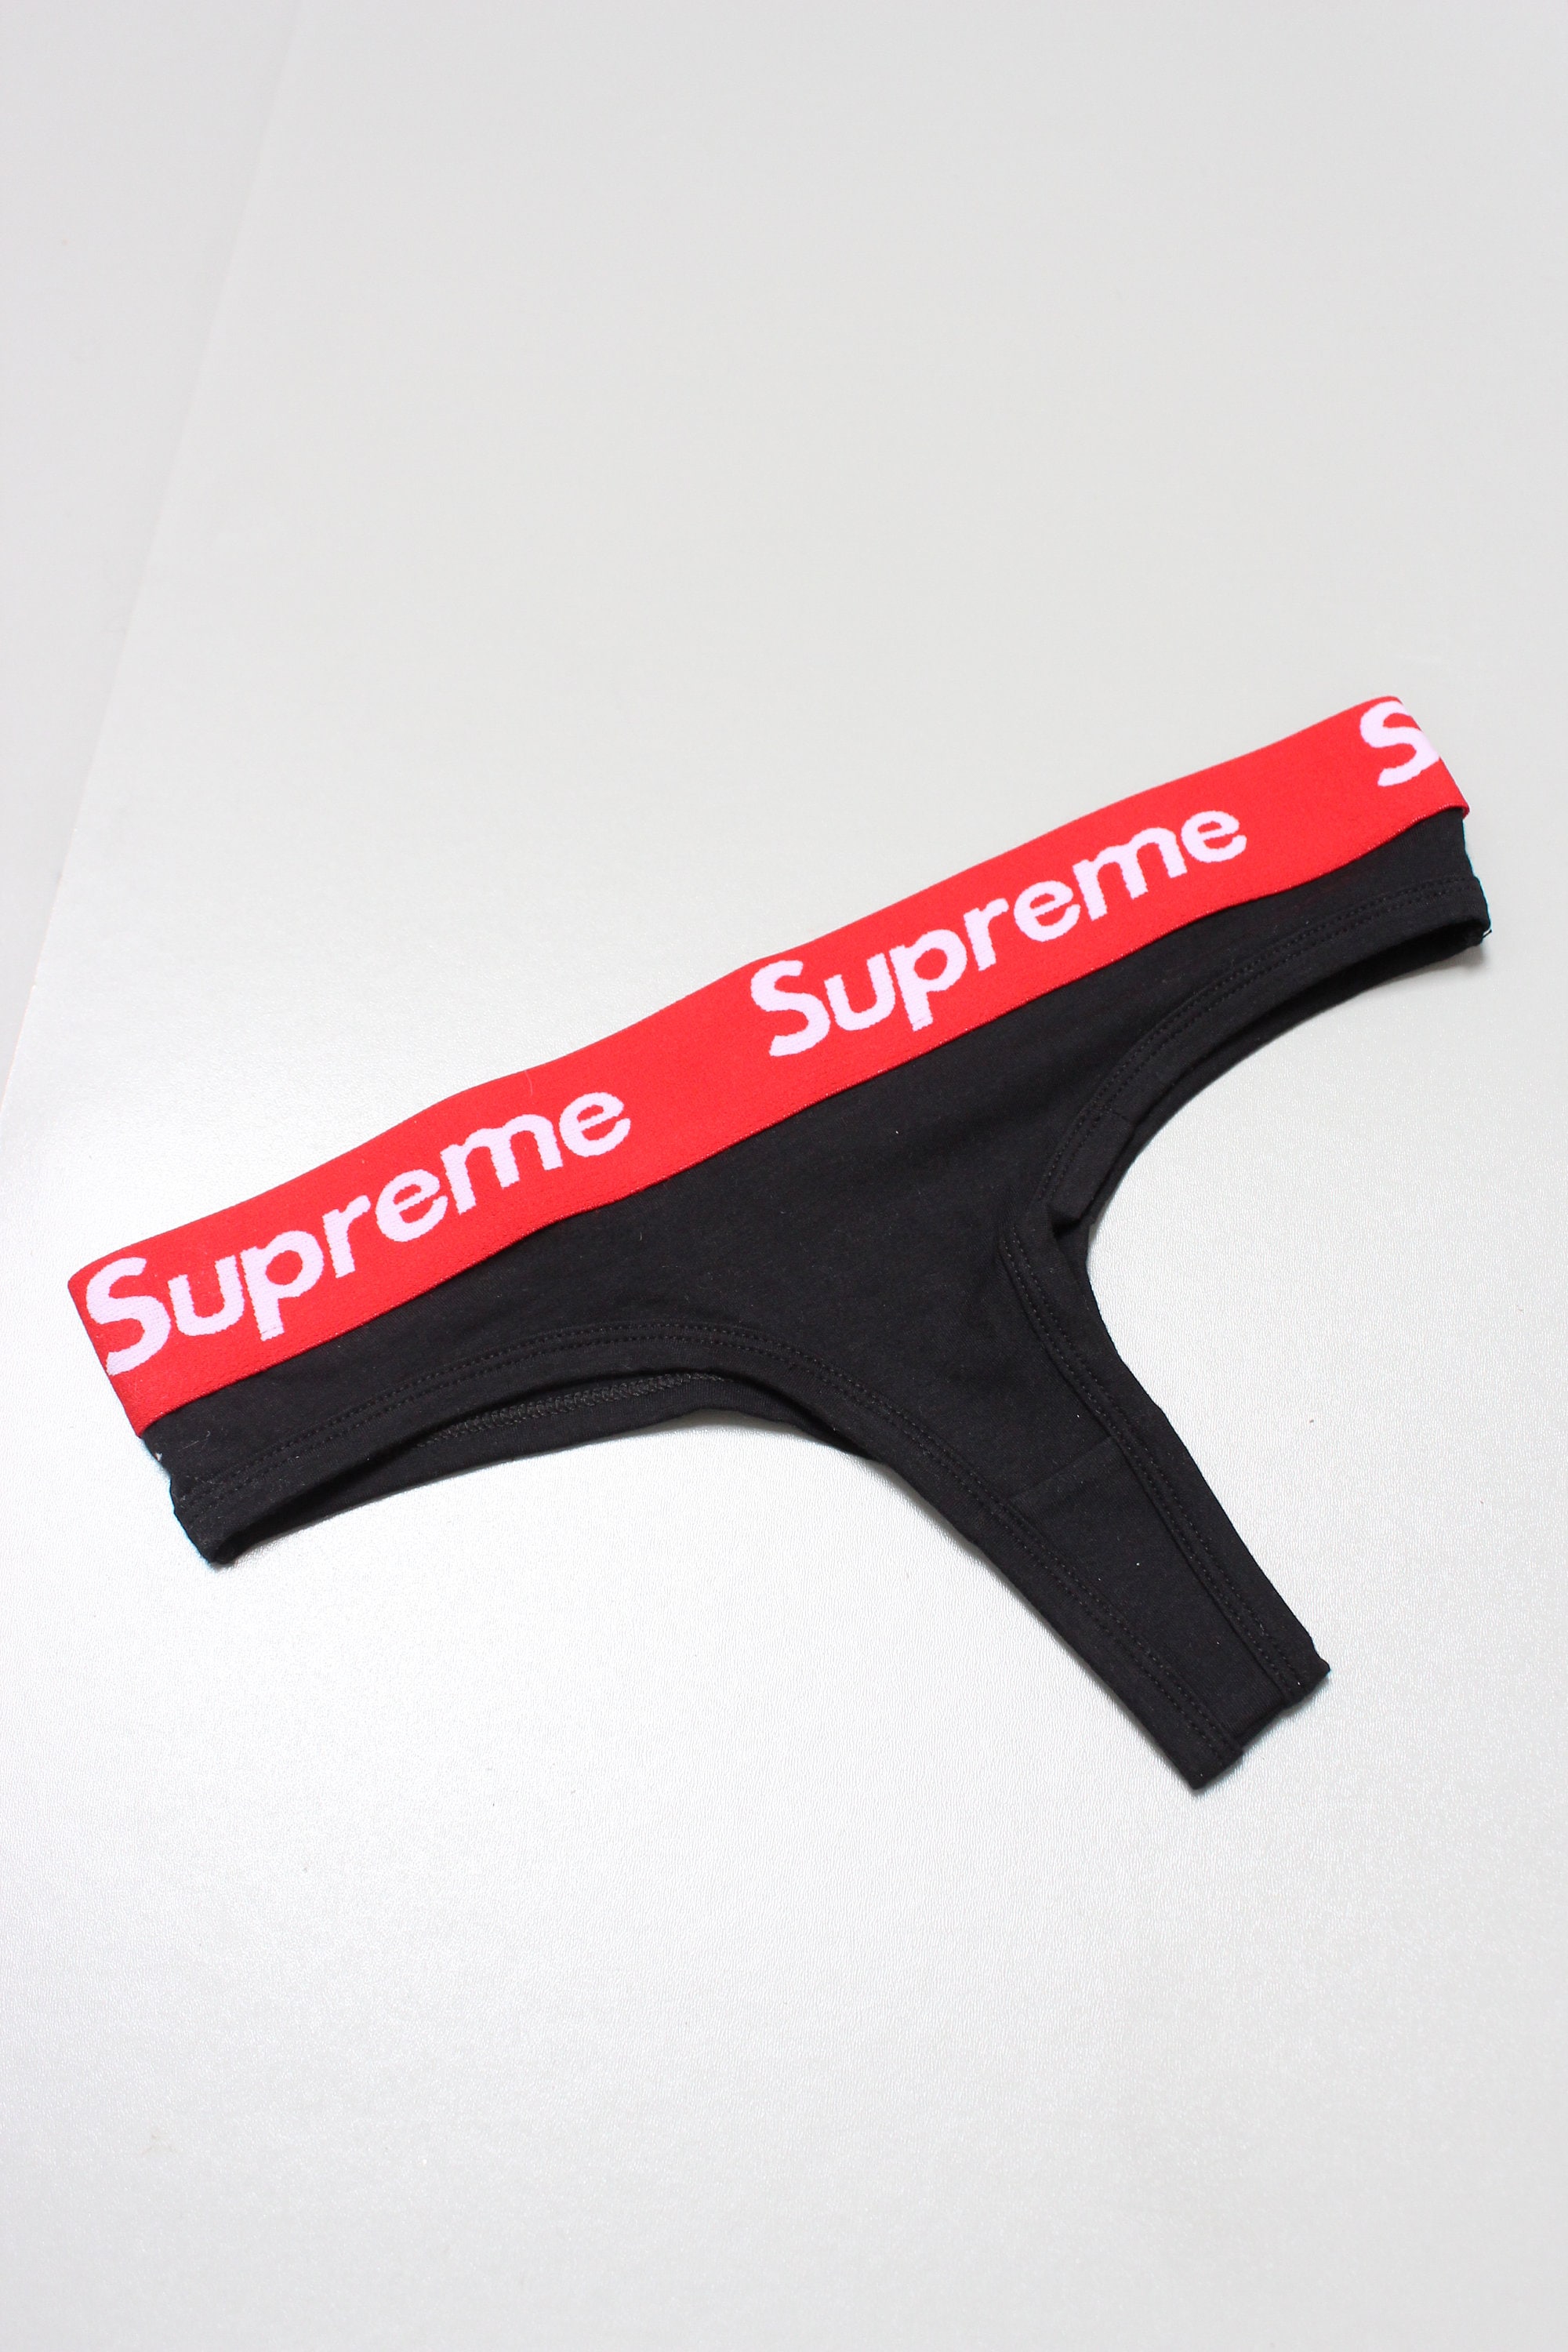 Supreme Reworked Black Thong, Supreme Underwear, Supreme Pants, Supreme  Knickers, Supreme Women Underwear 